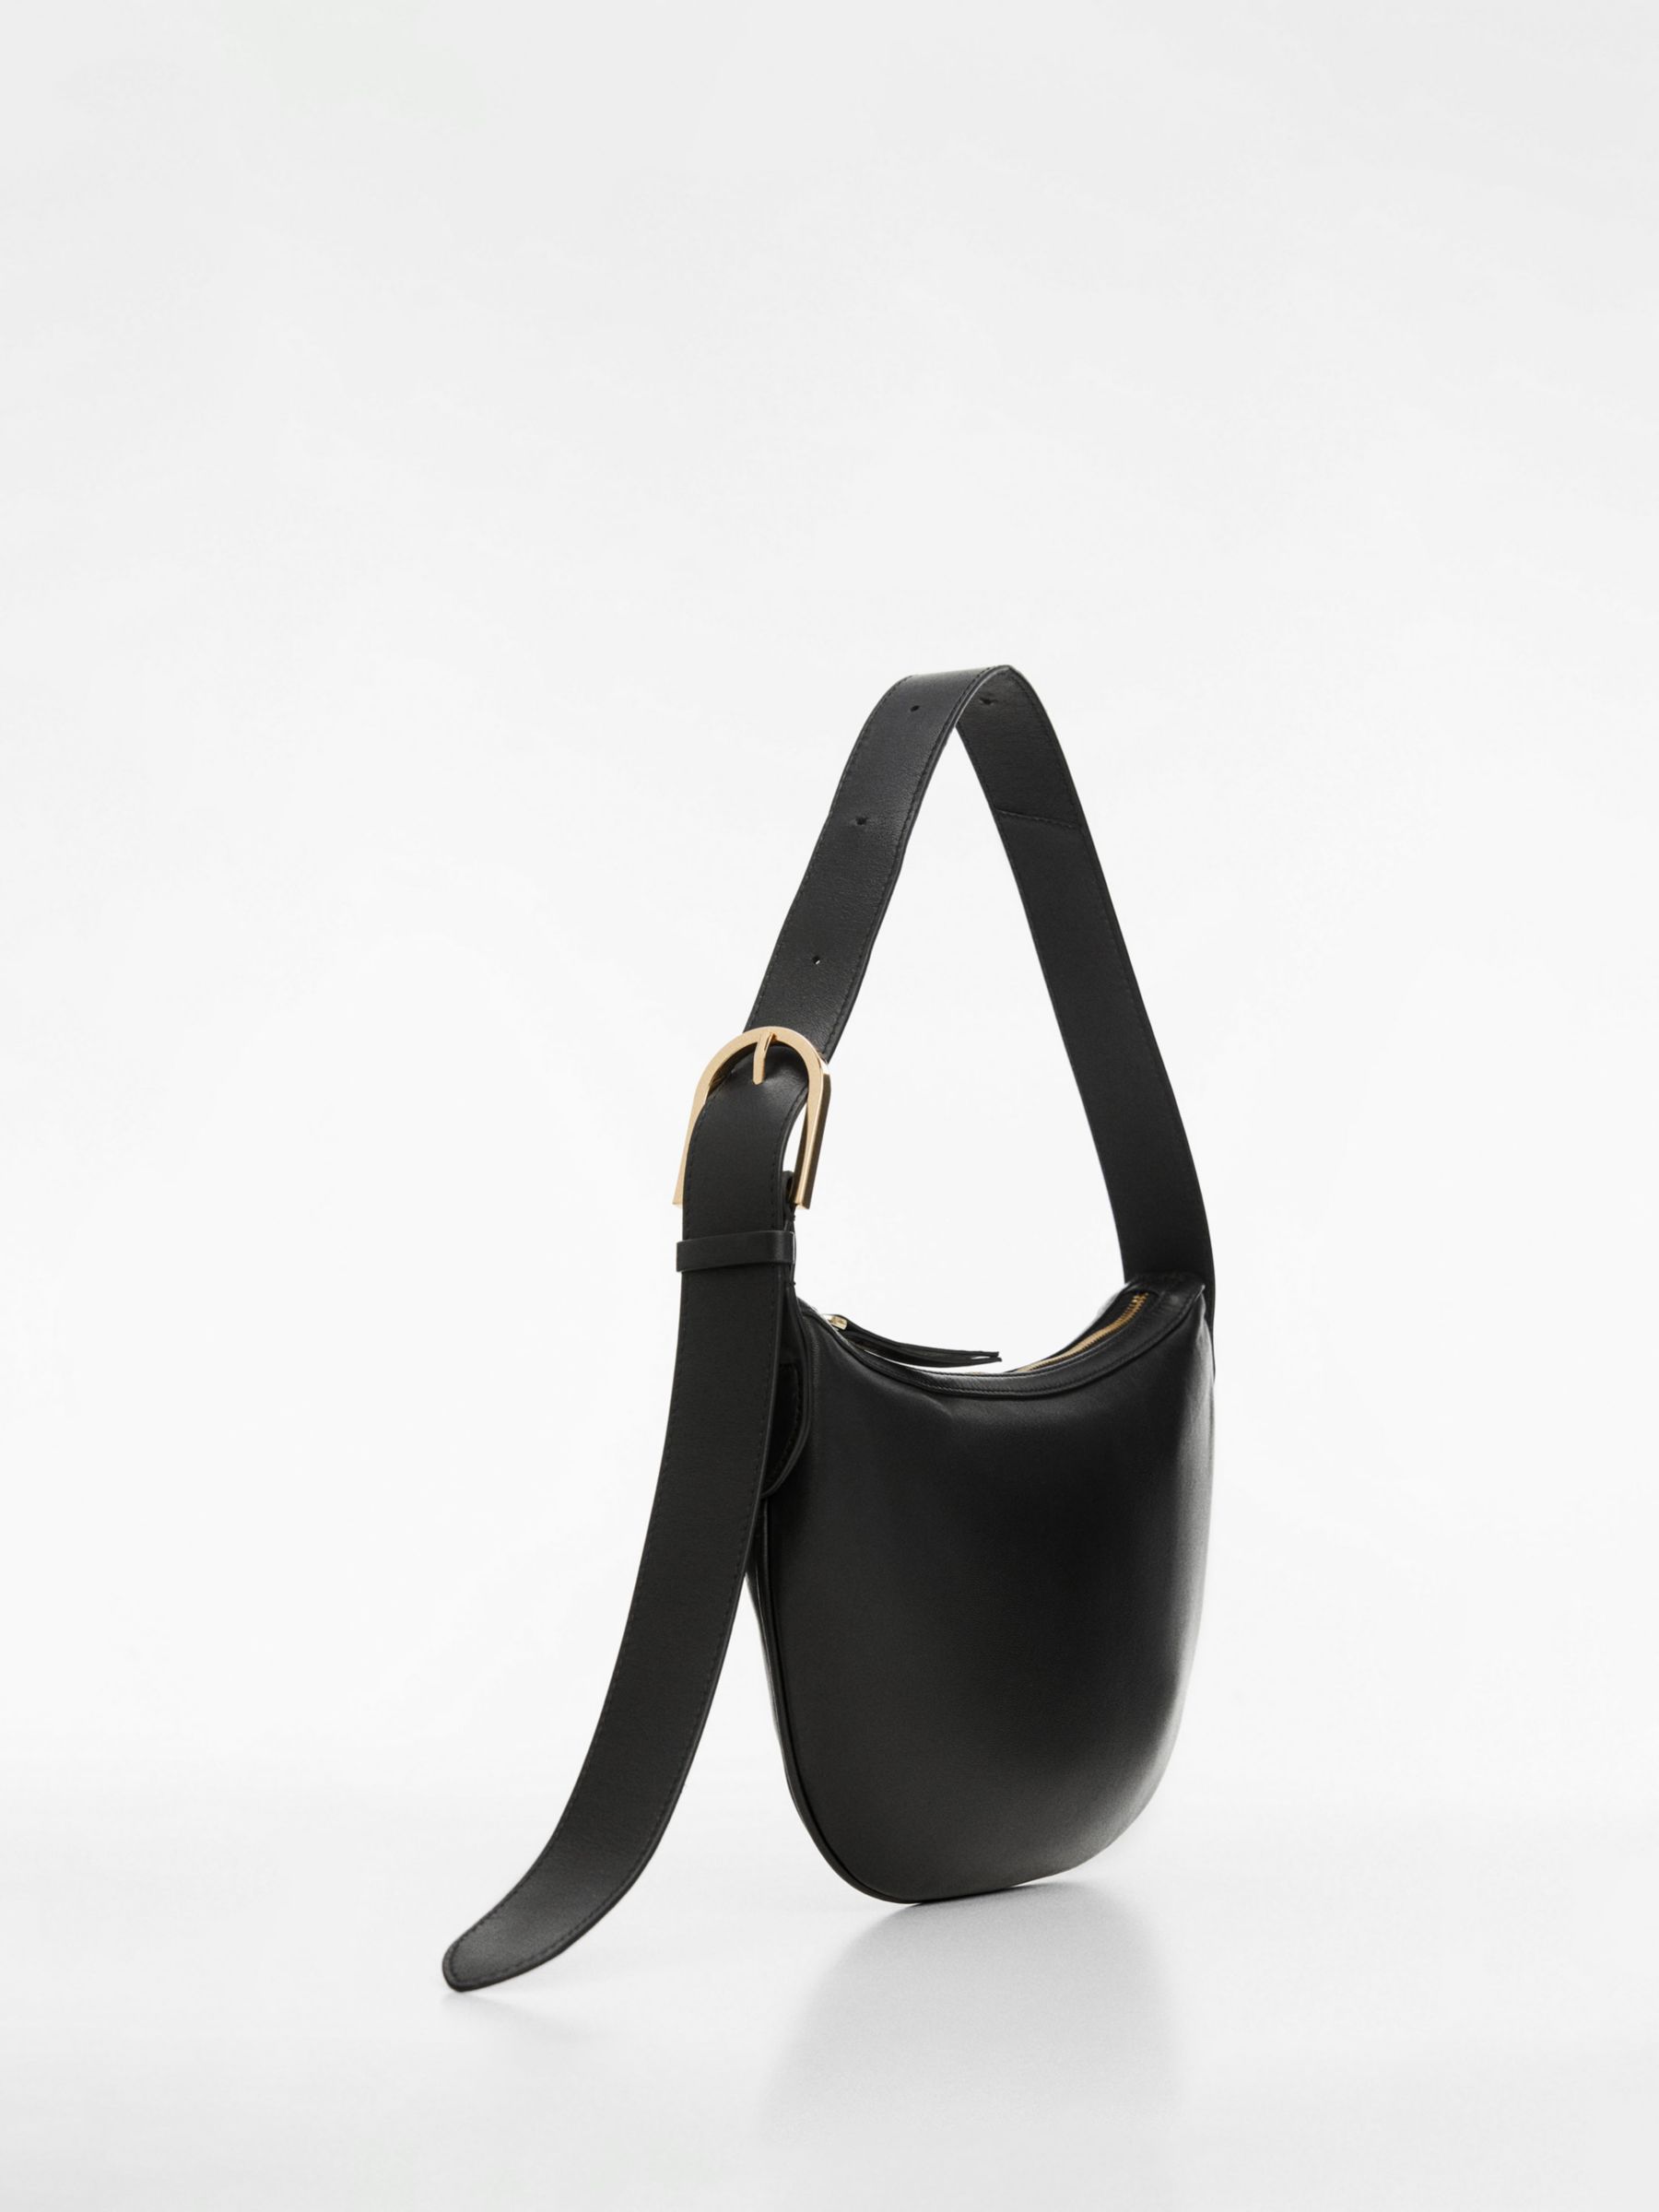 Mango Ivory Small Leather Shoulder Bag, Black at John Lewis & Partners